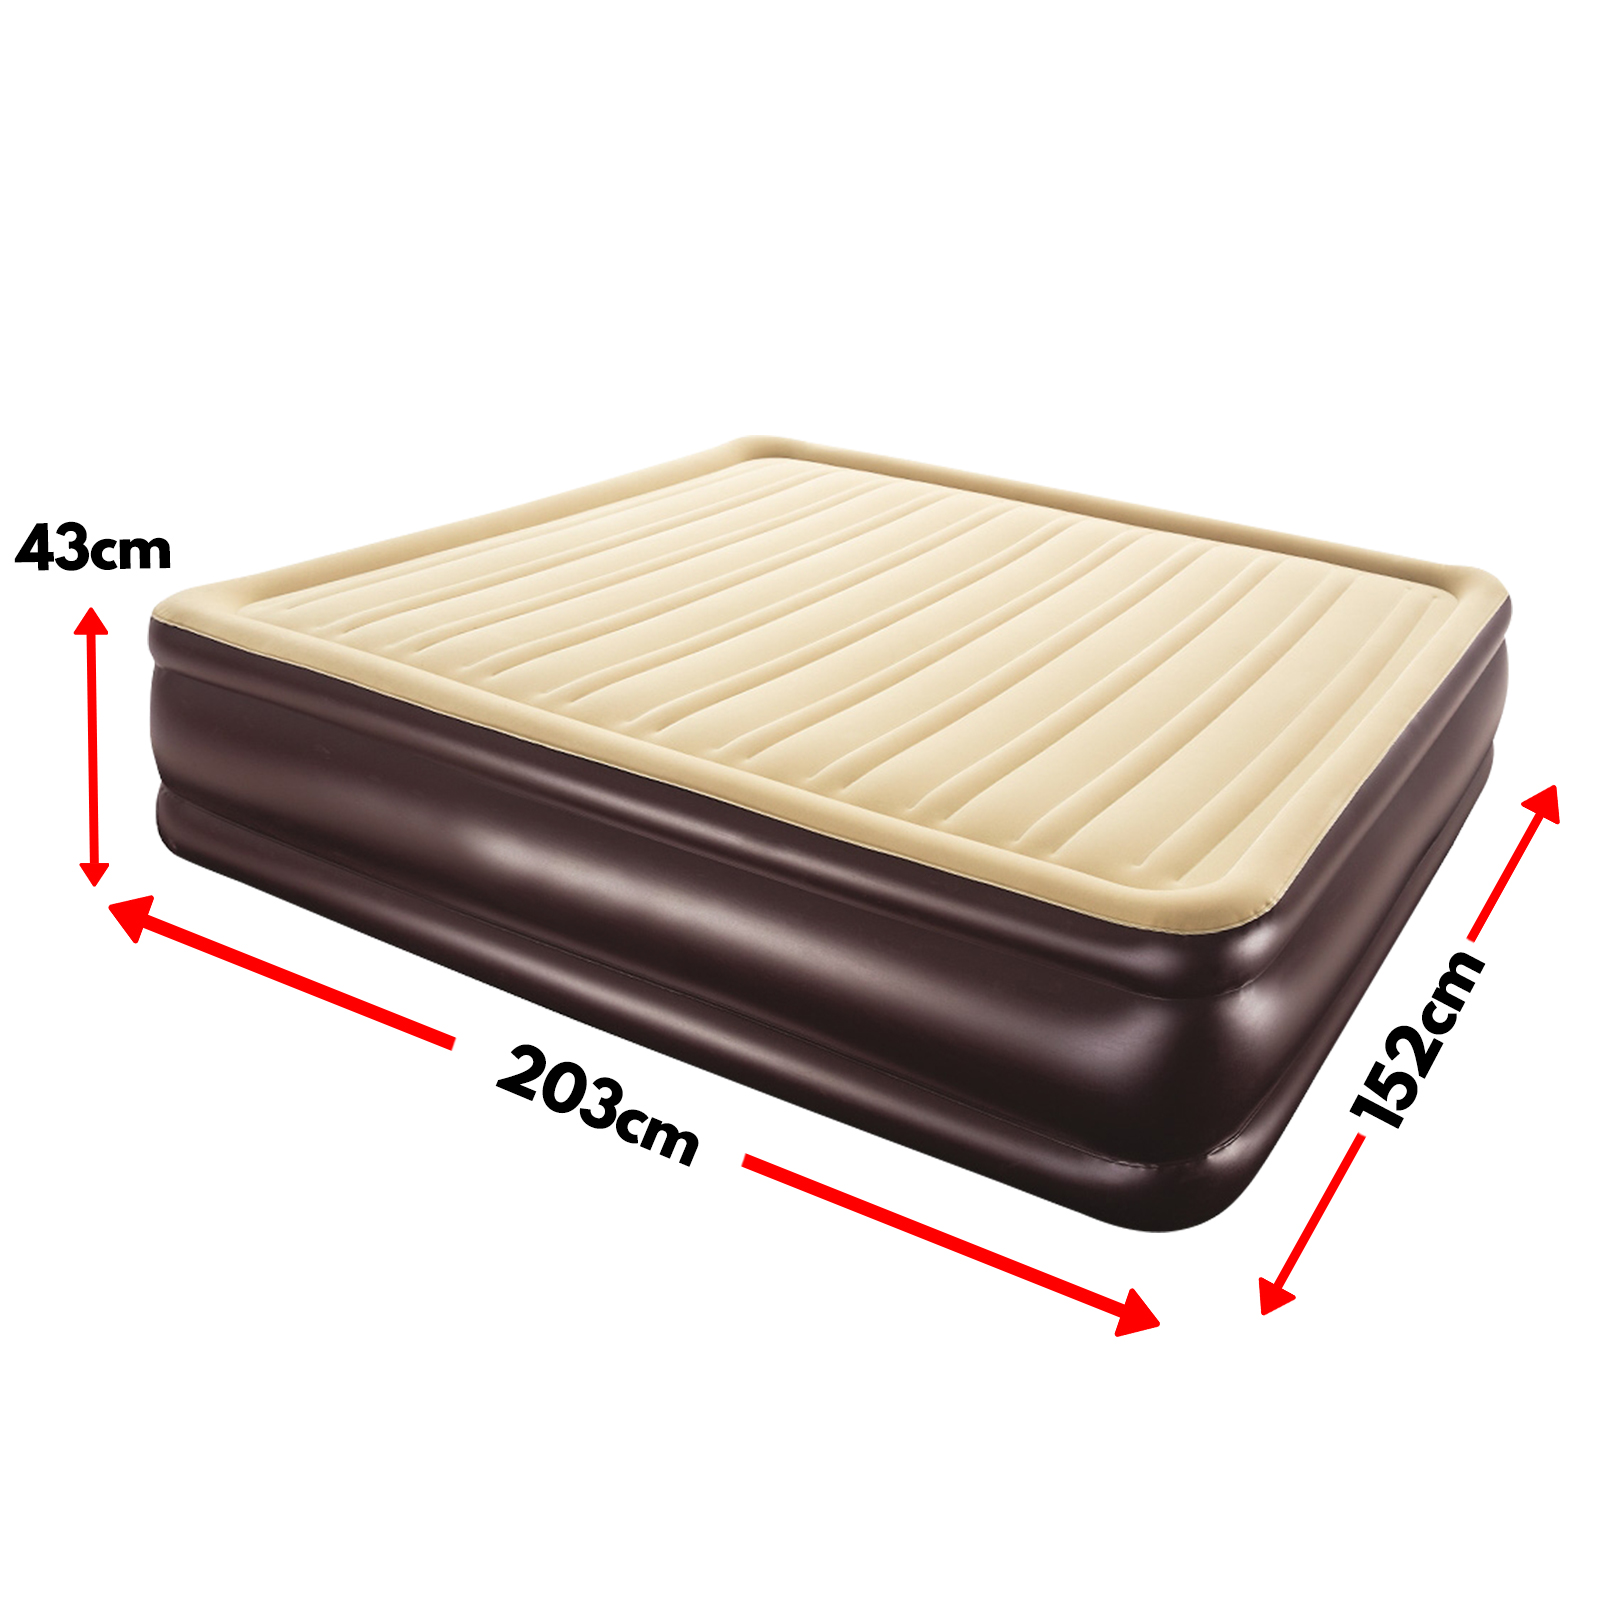 Queen Size Air Bed Inflatable Mattress Sleeping Mat 43CM Thick - Brown